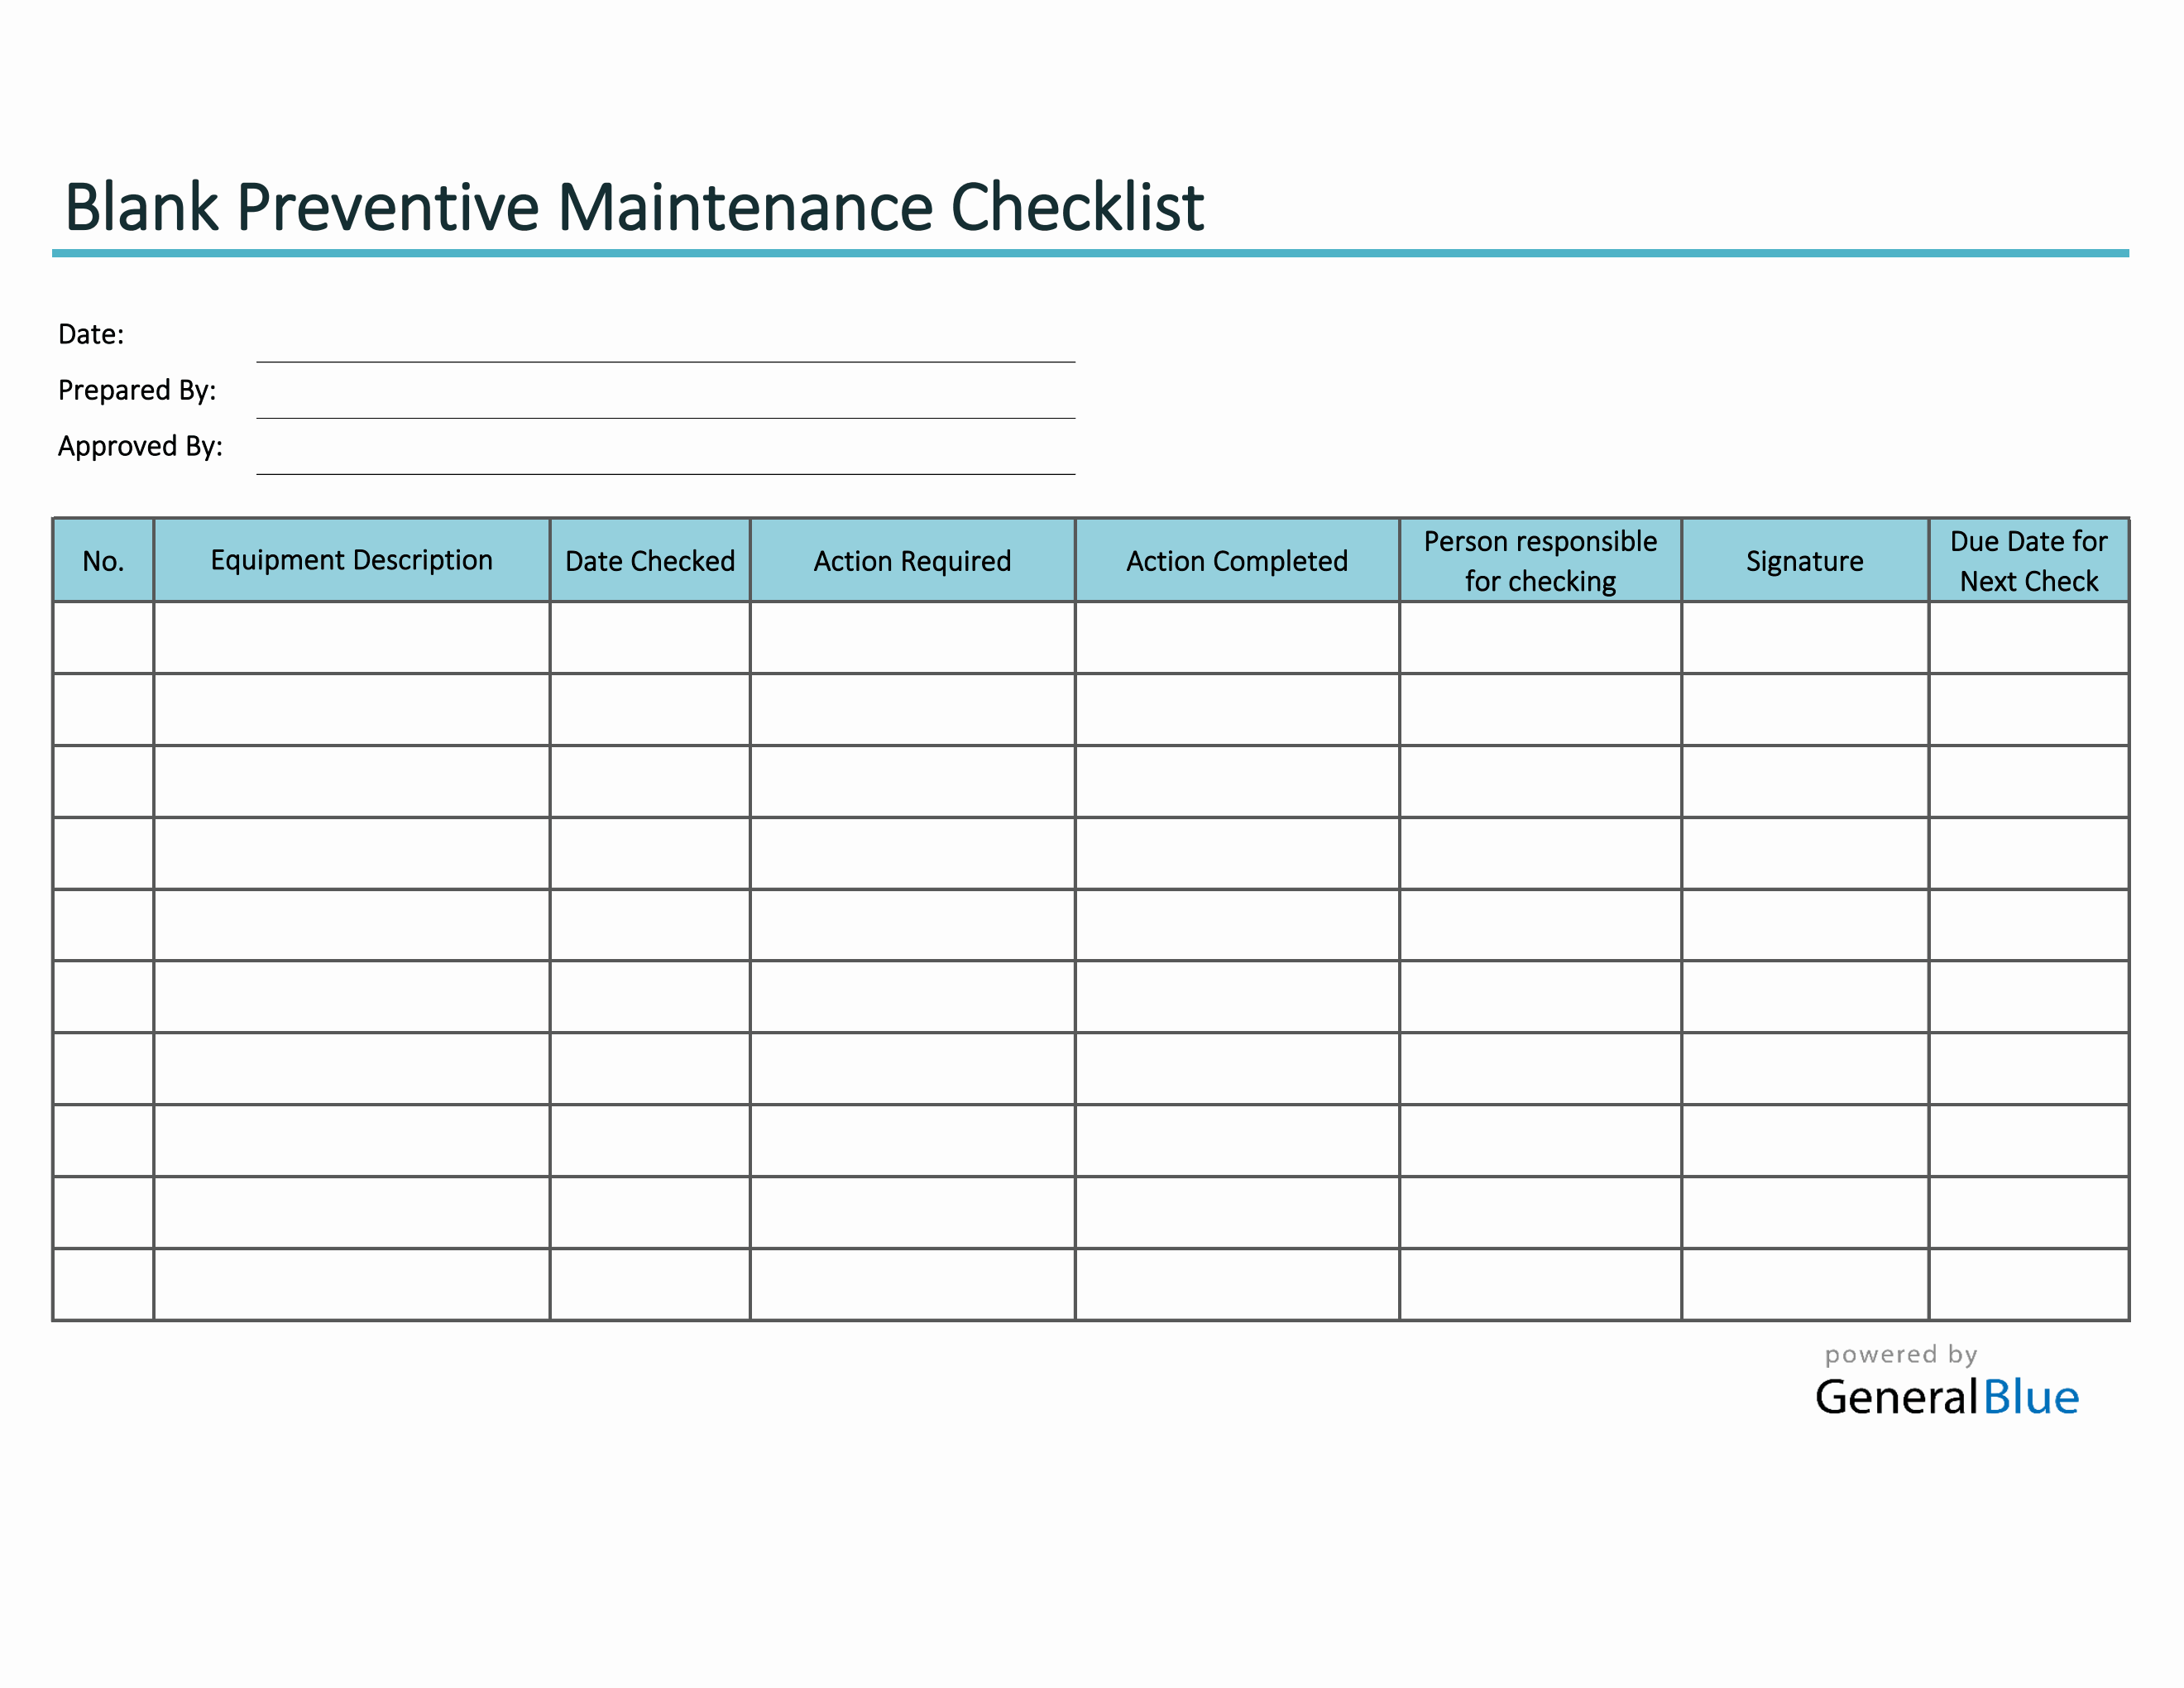 blank-preventive-maintenance-checklist-in-excel